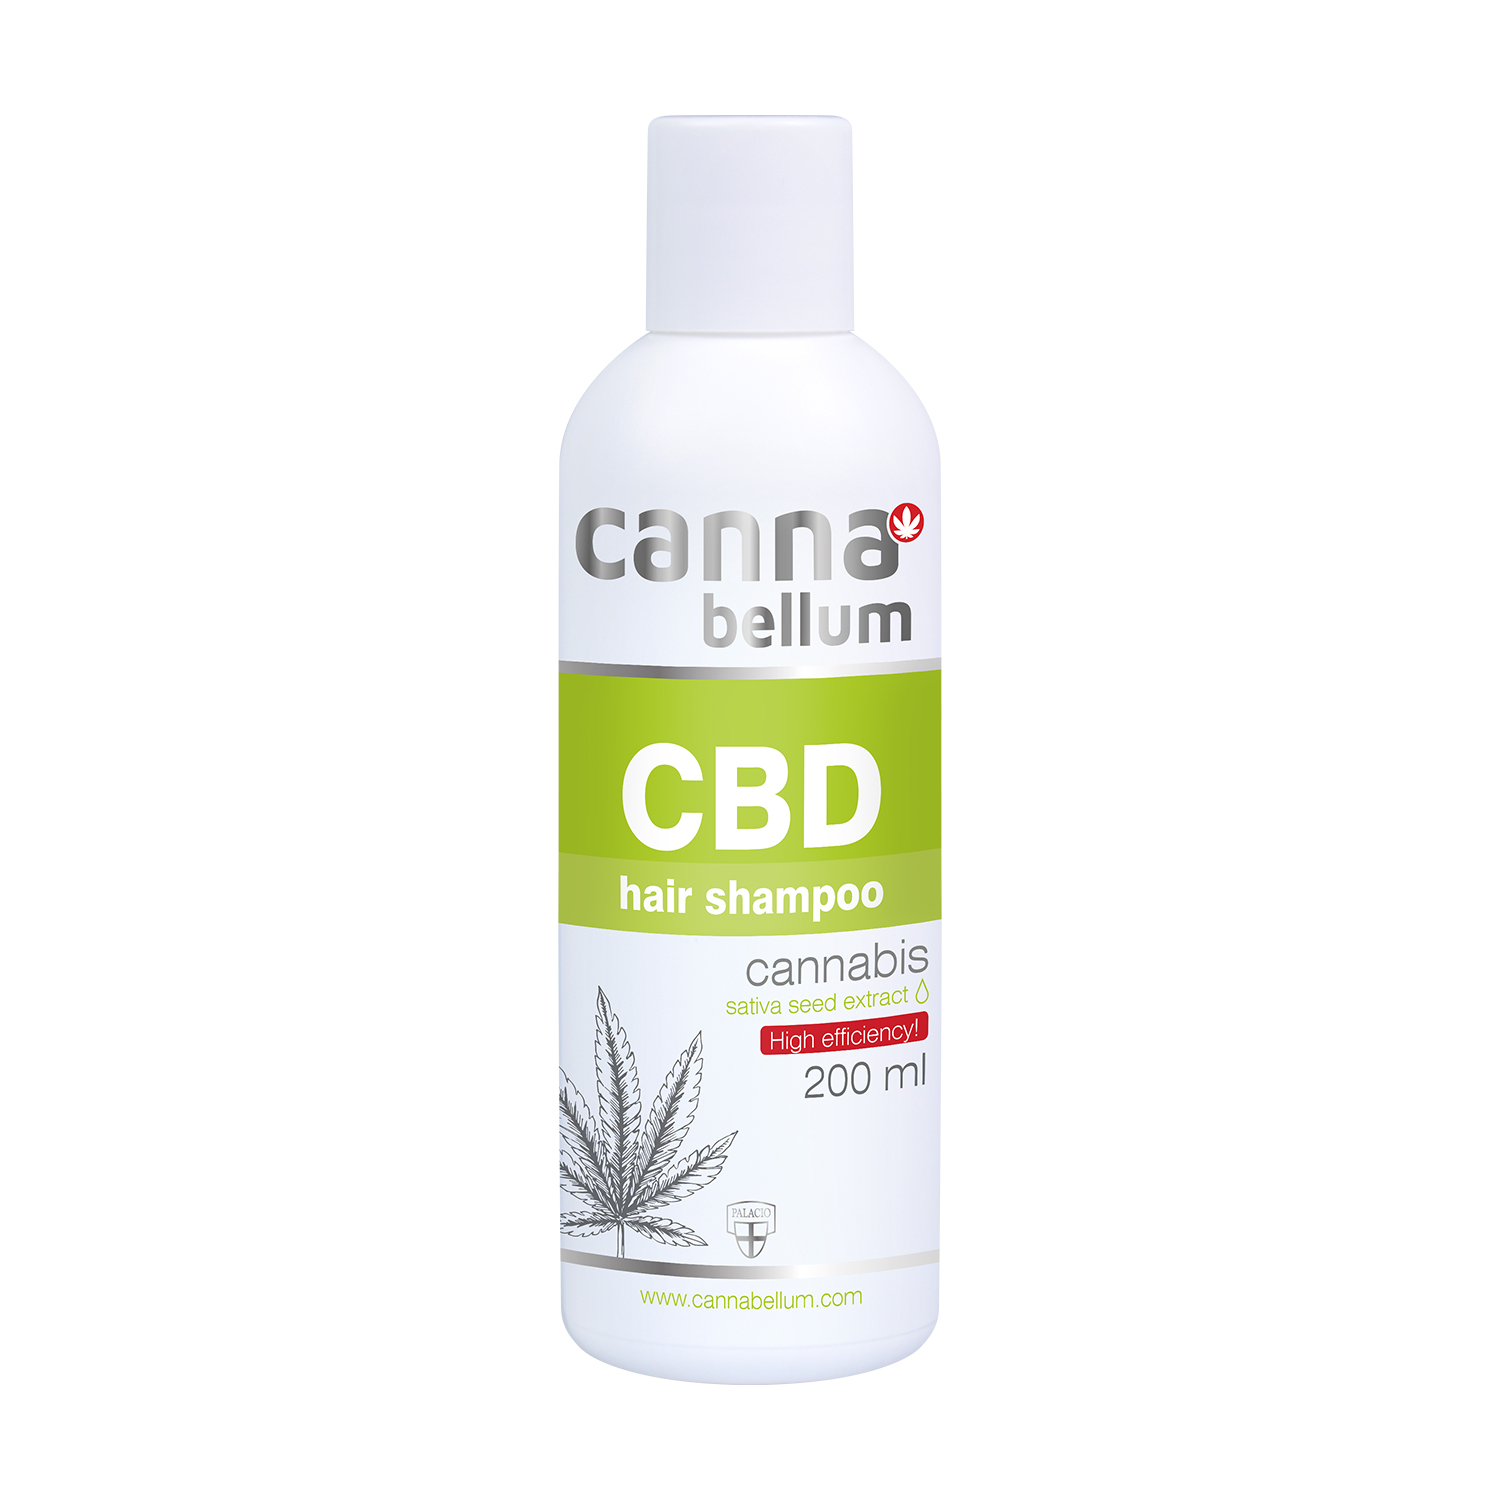 Cannabellum CBD hair shampoo 200ml P1251 WEB 110